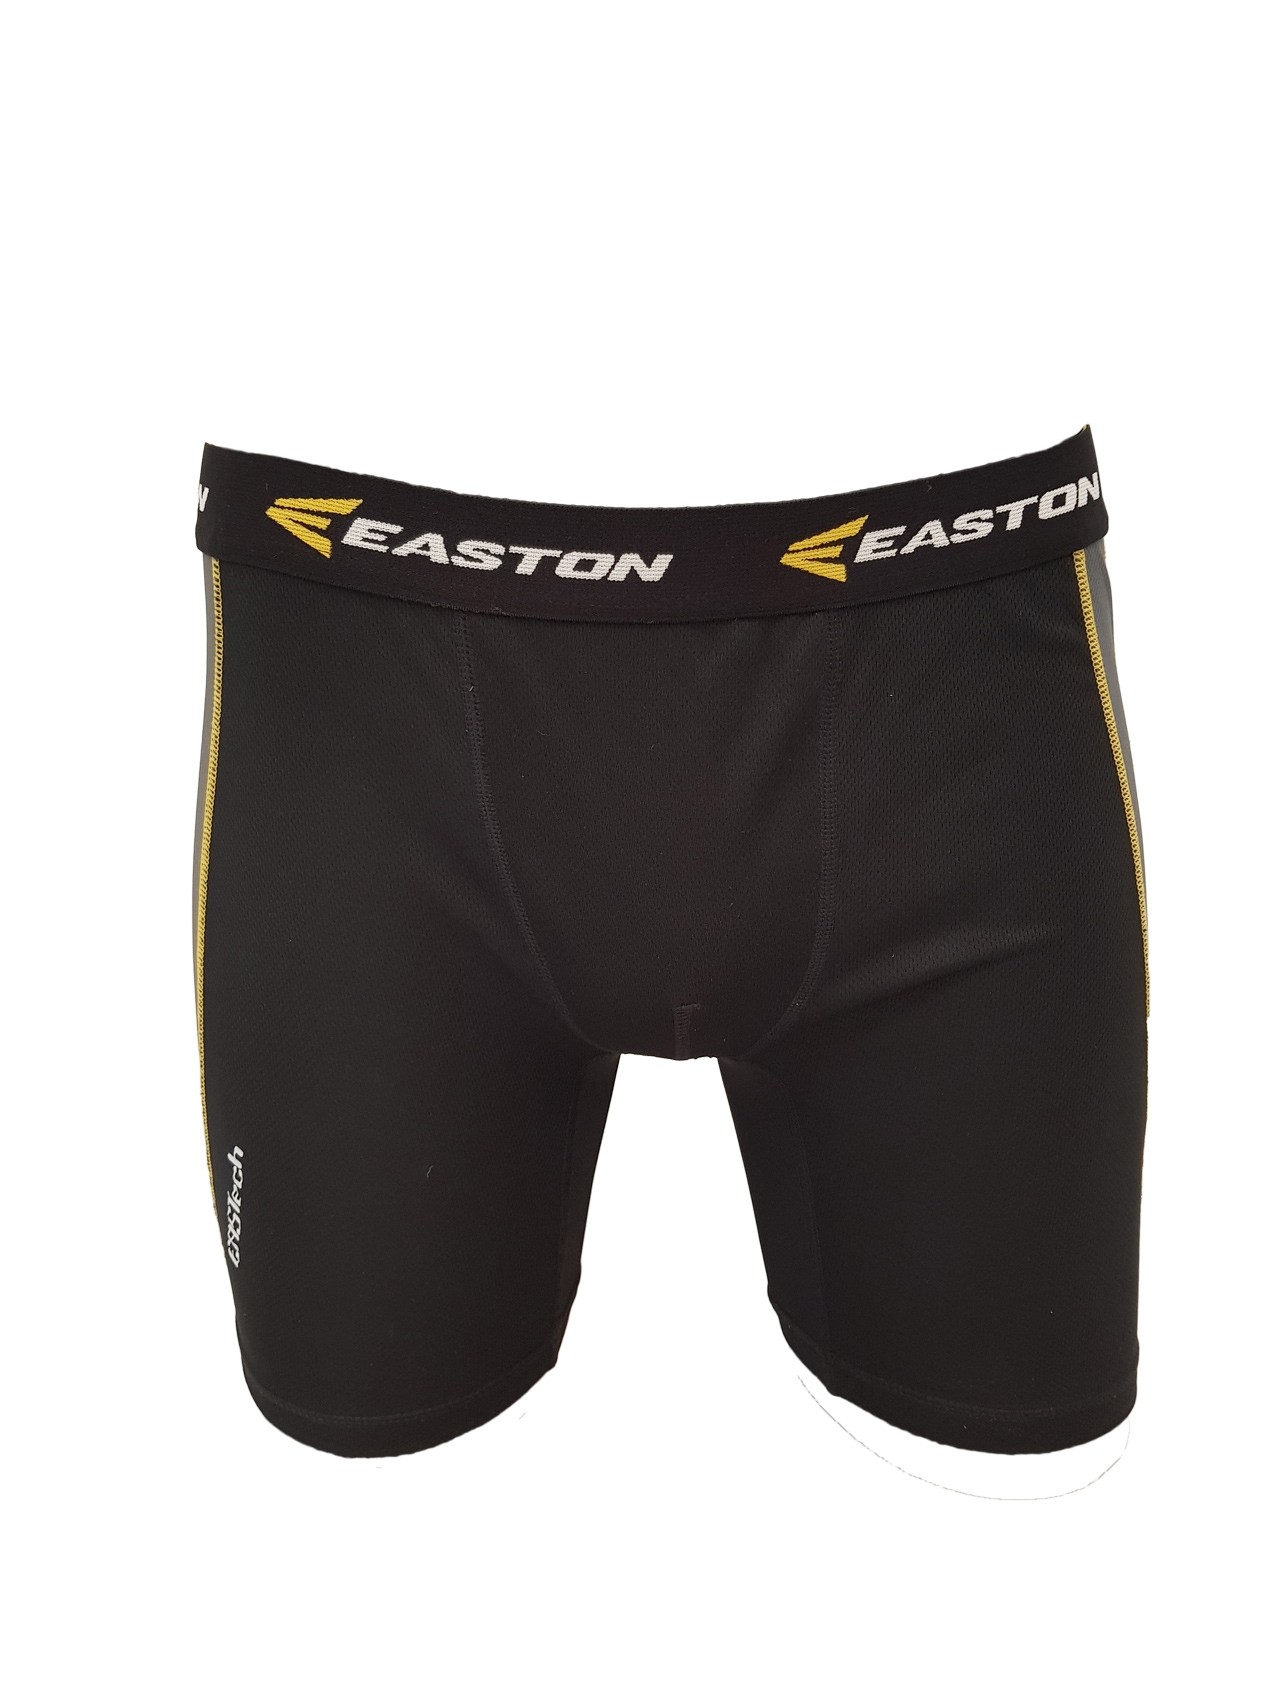 Easton Eastech Junior Compression Shorts